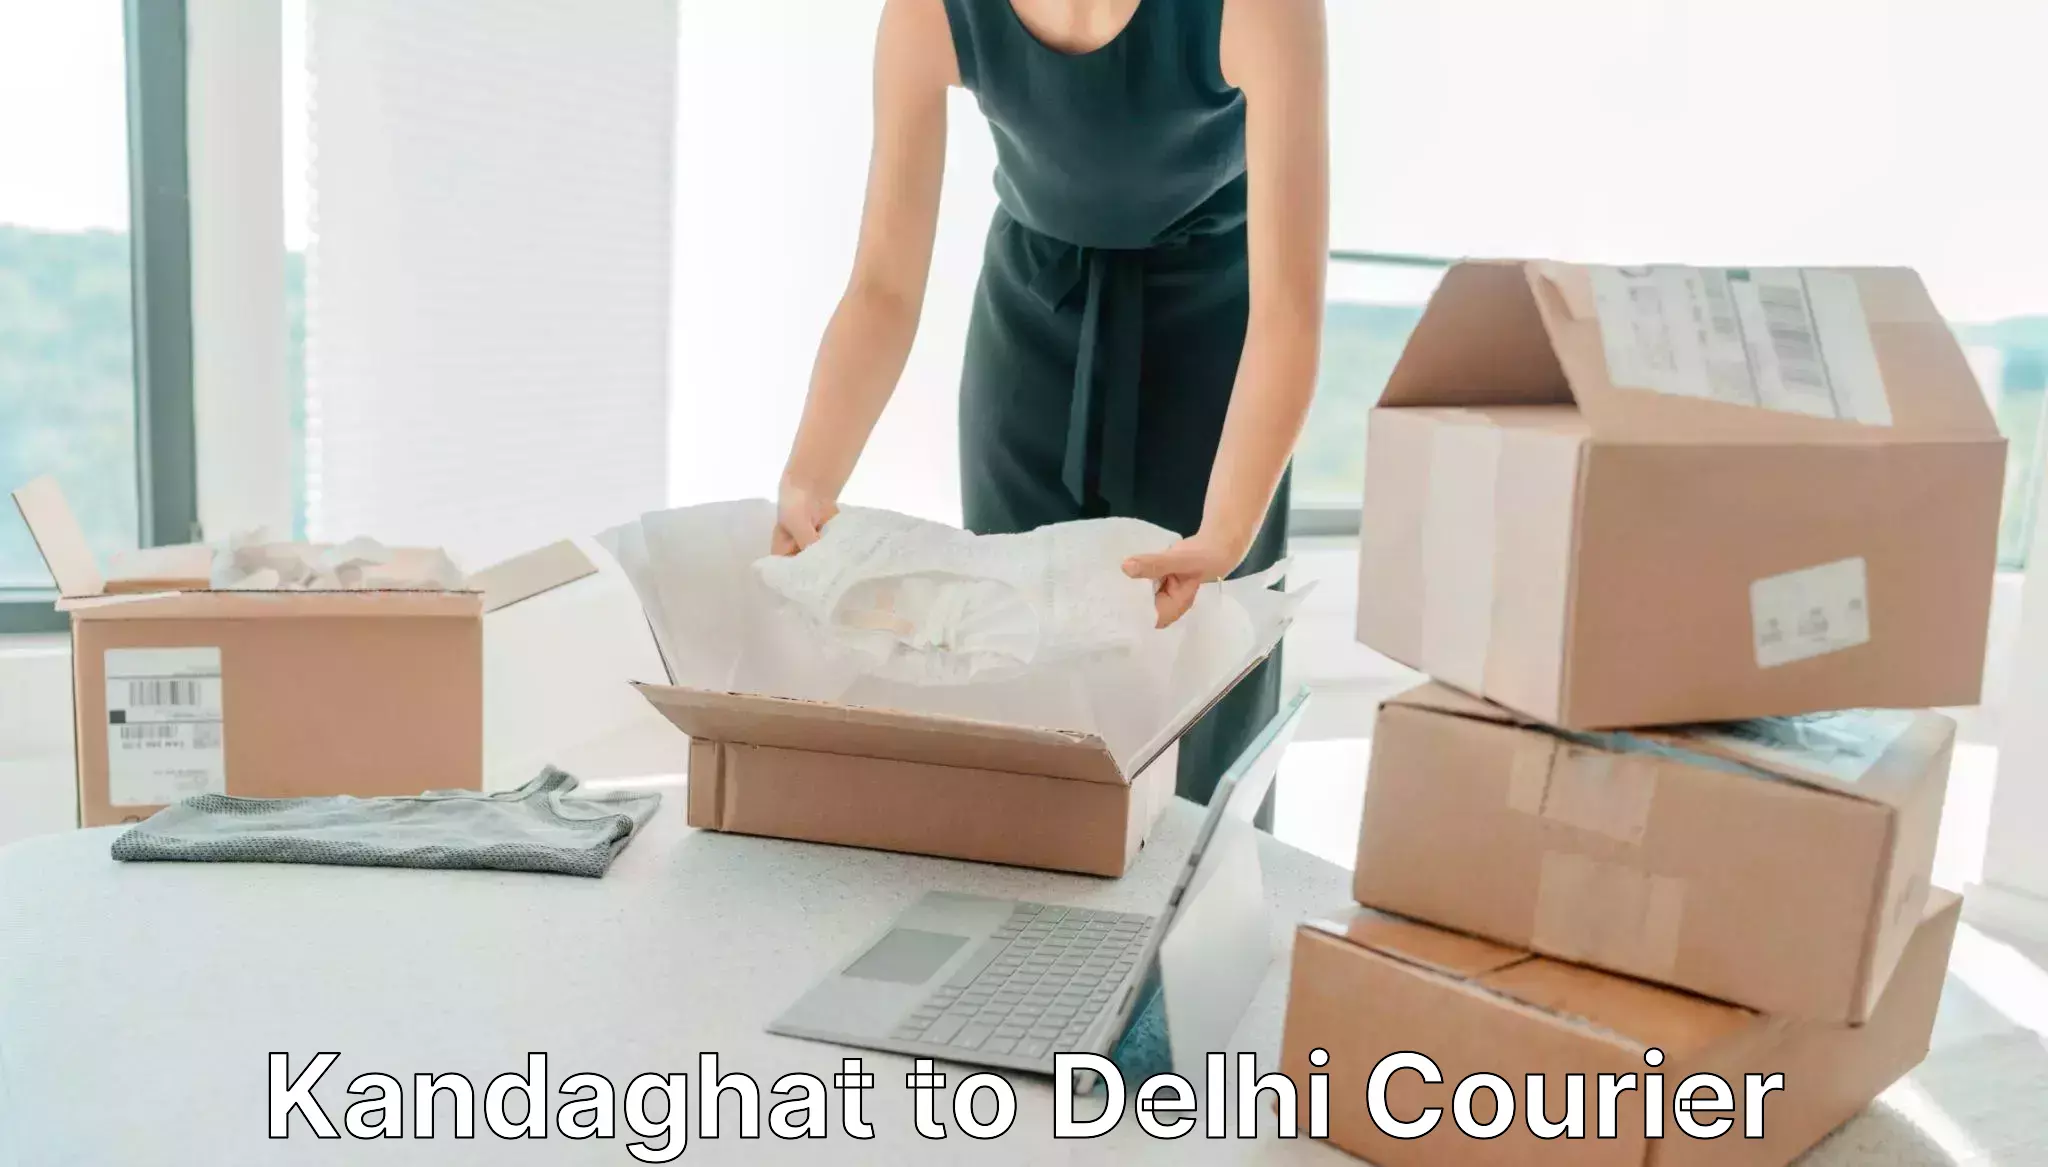 Efficient order fulfillment Kandaghat to Delhi